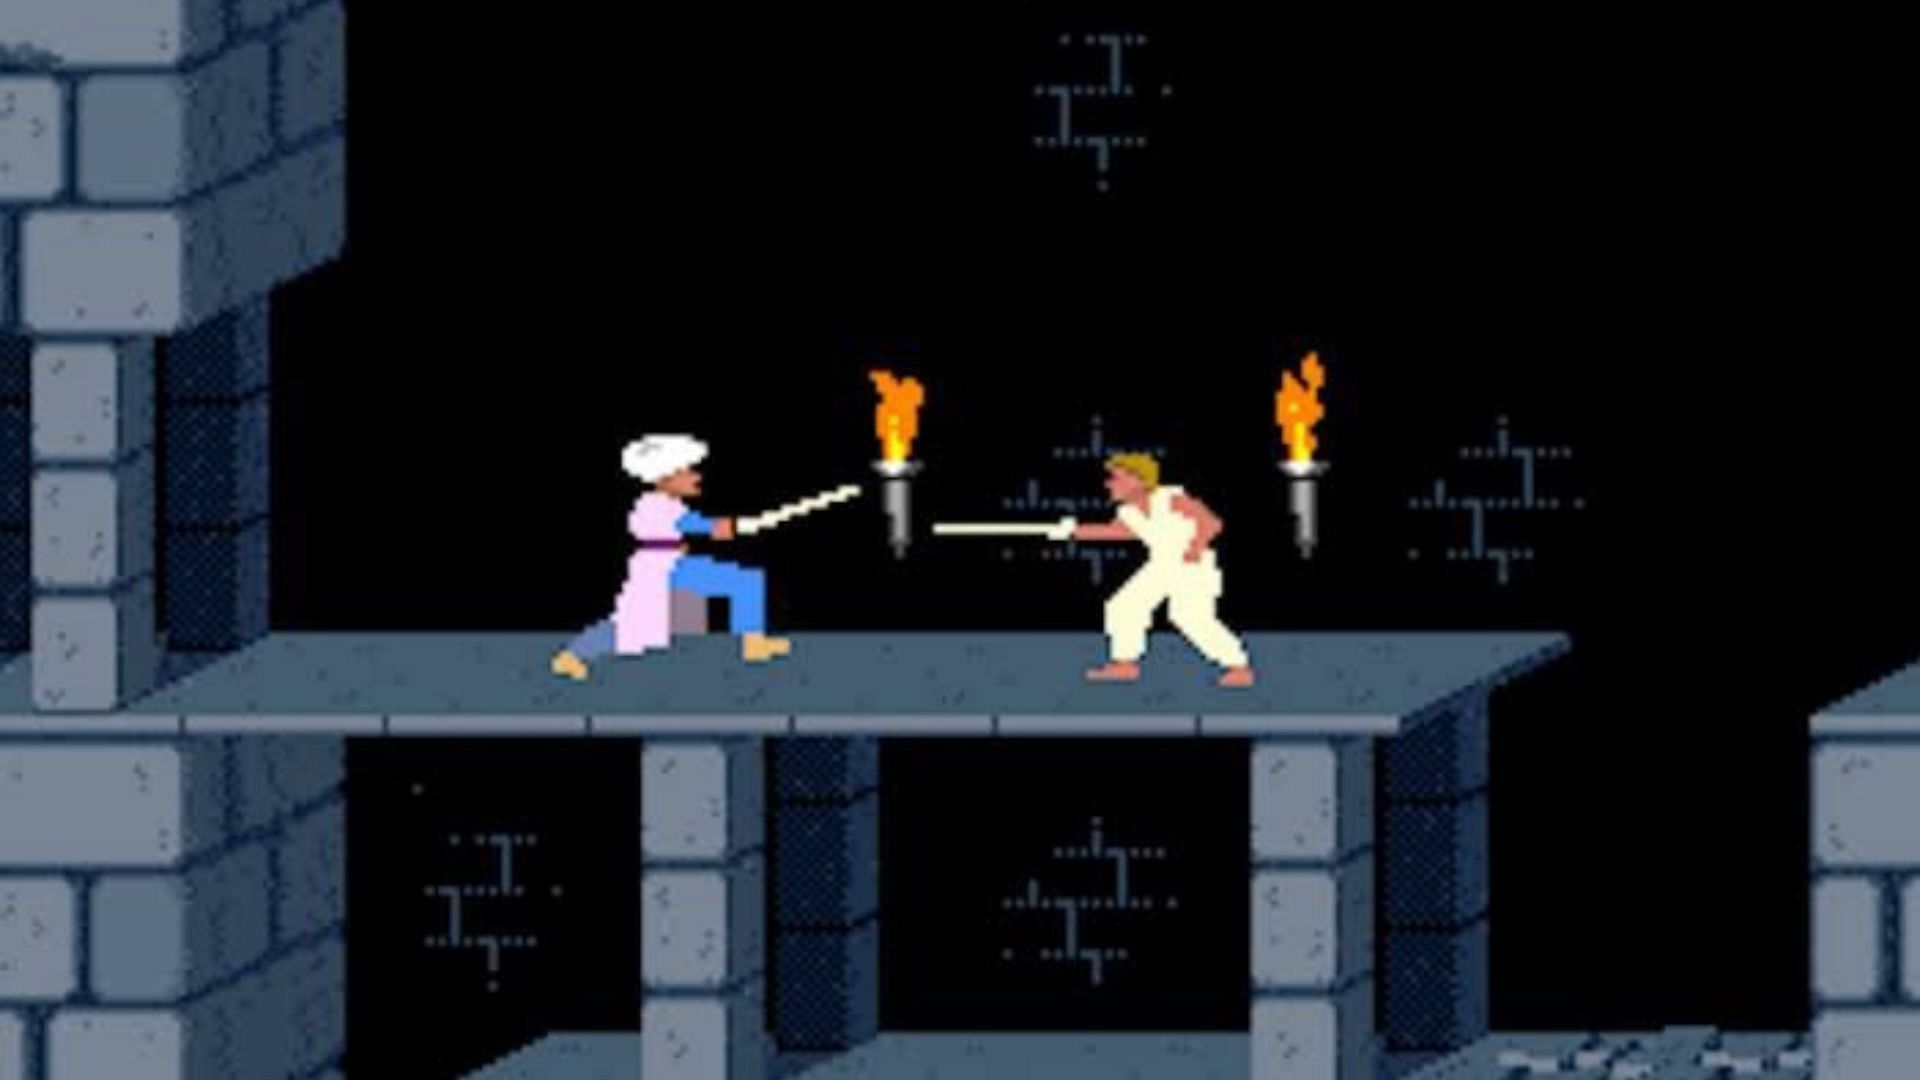 Prince of Persia (1989) (Image via Ubisoft)